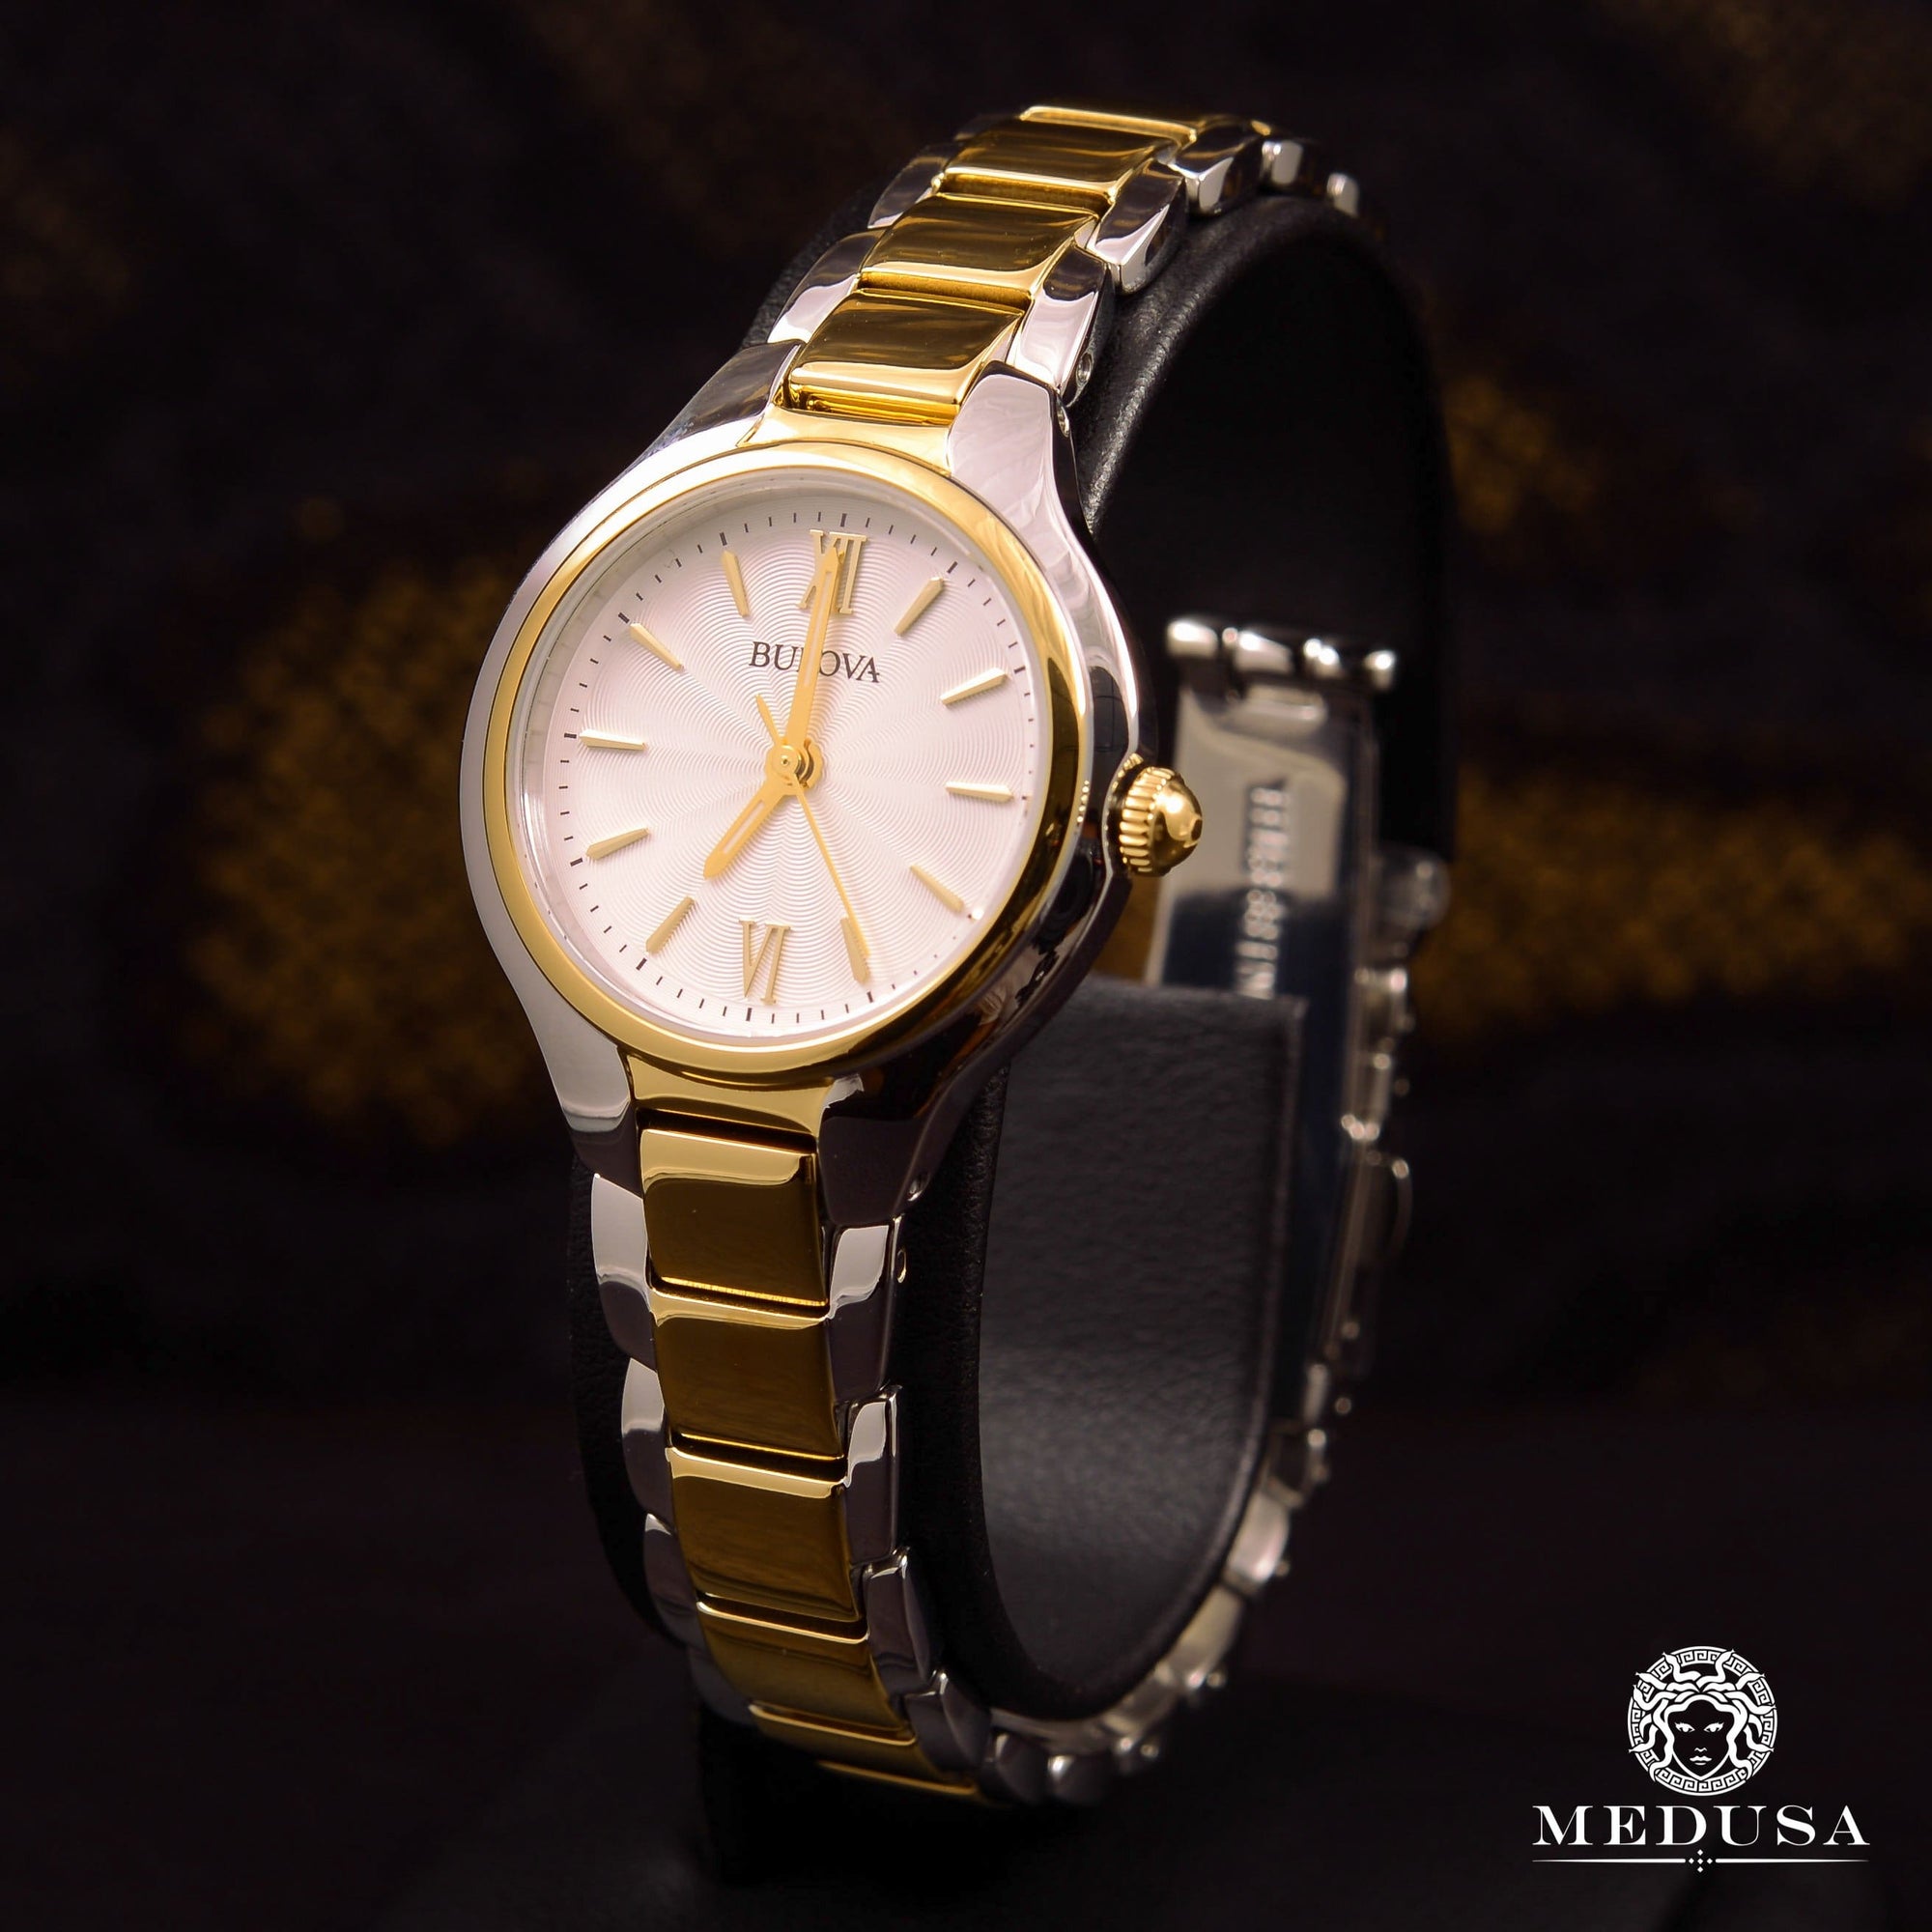 Bulova Watch | Bulova Classic Women's Watch - 98L217 Gold 2 Tones